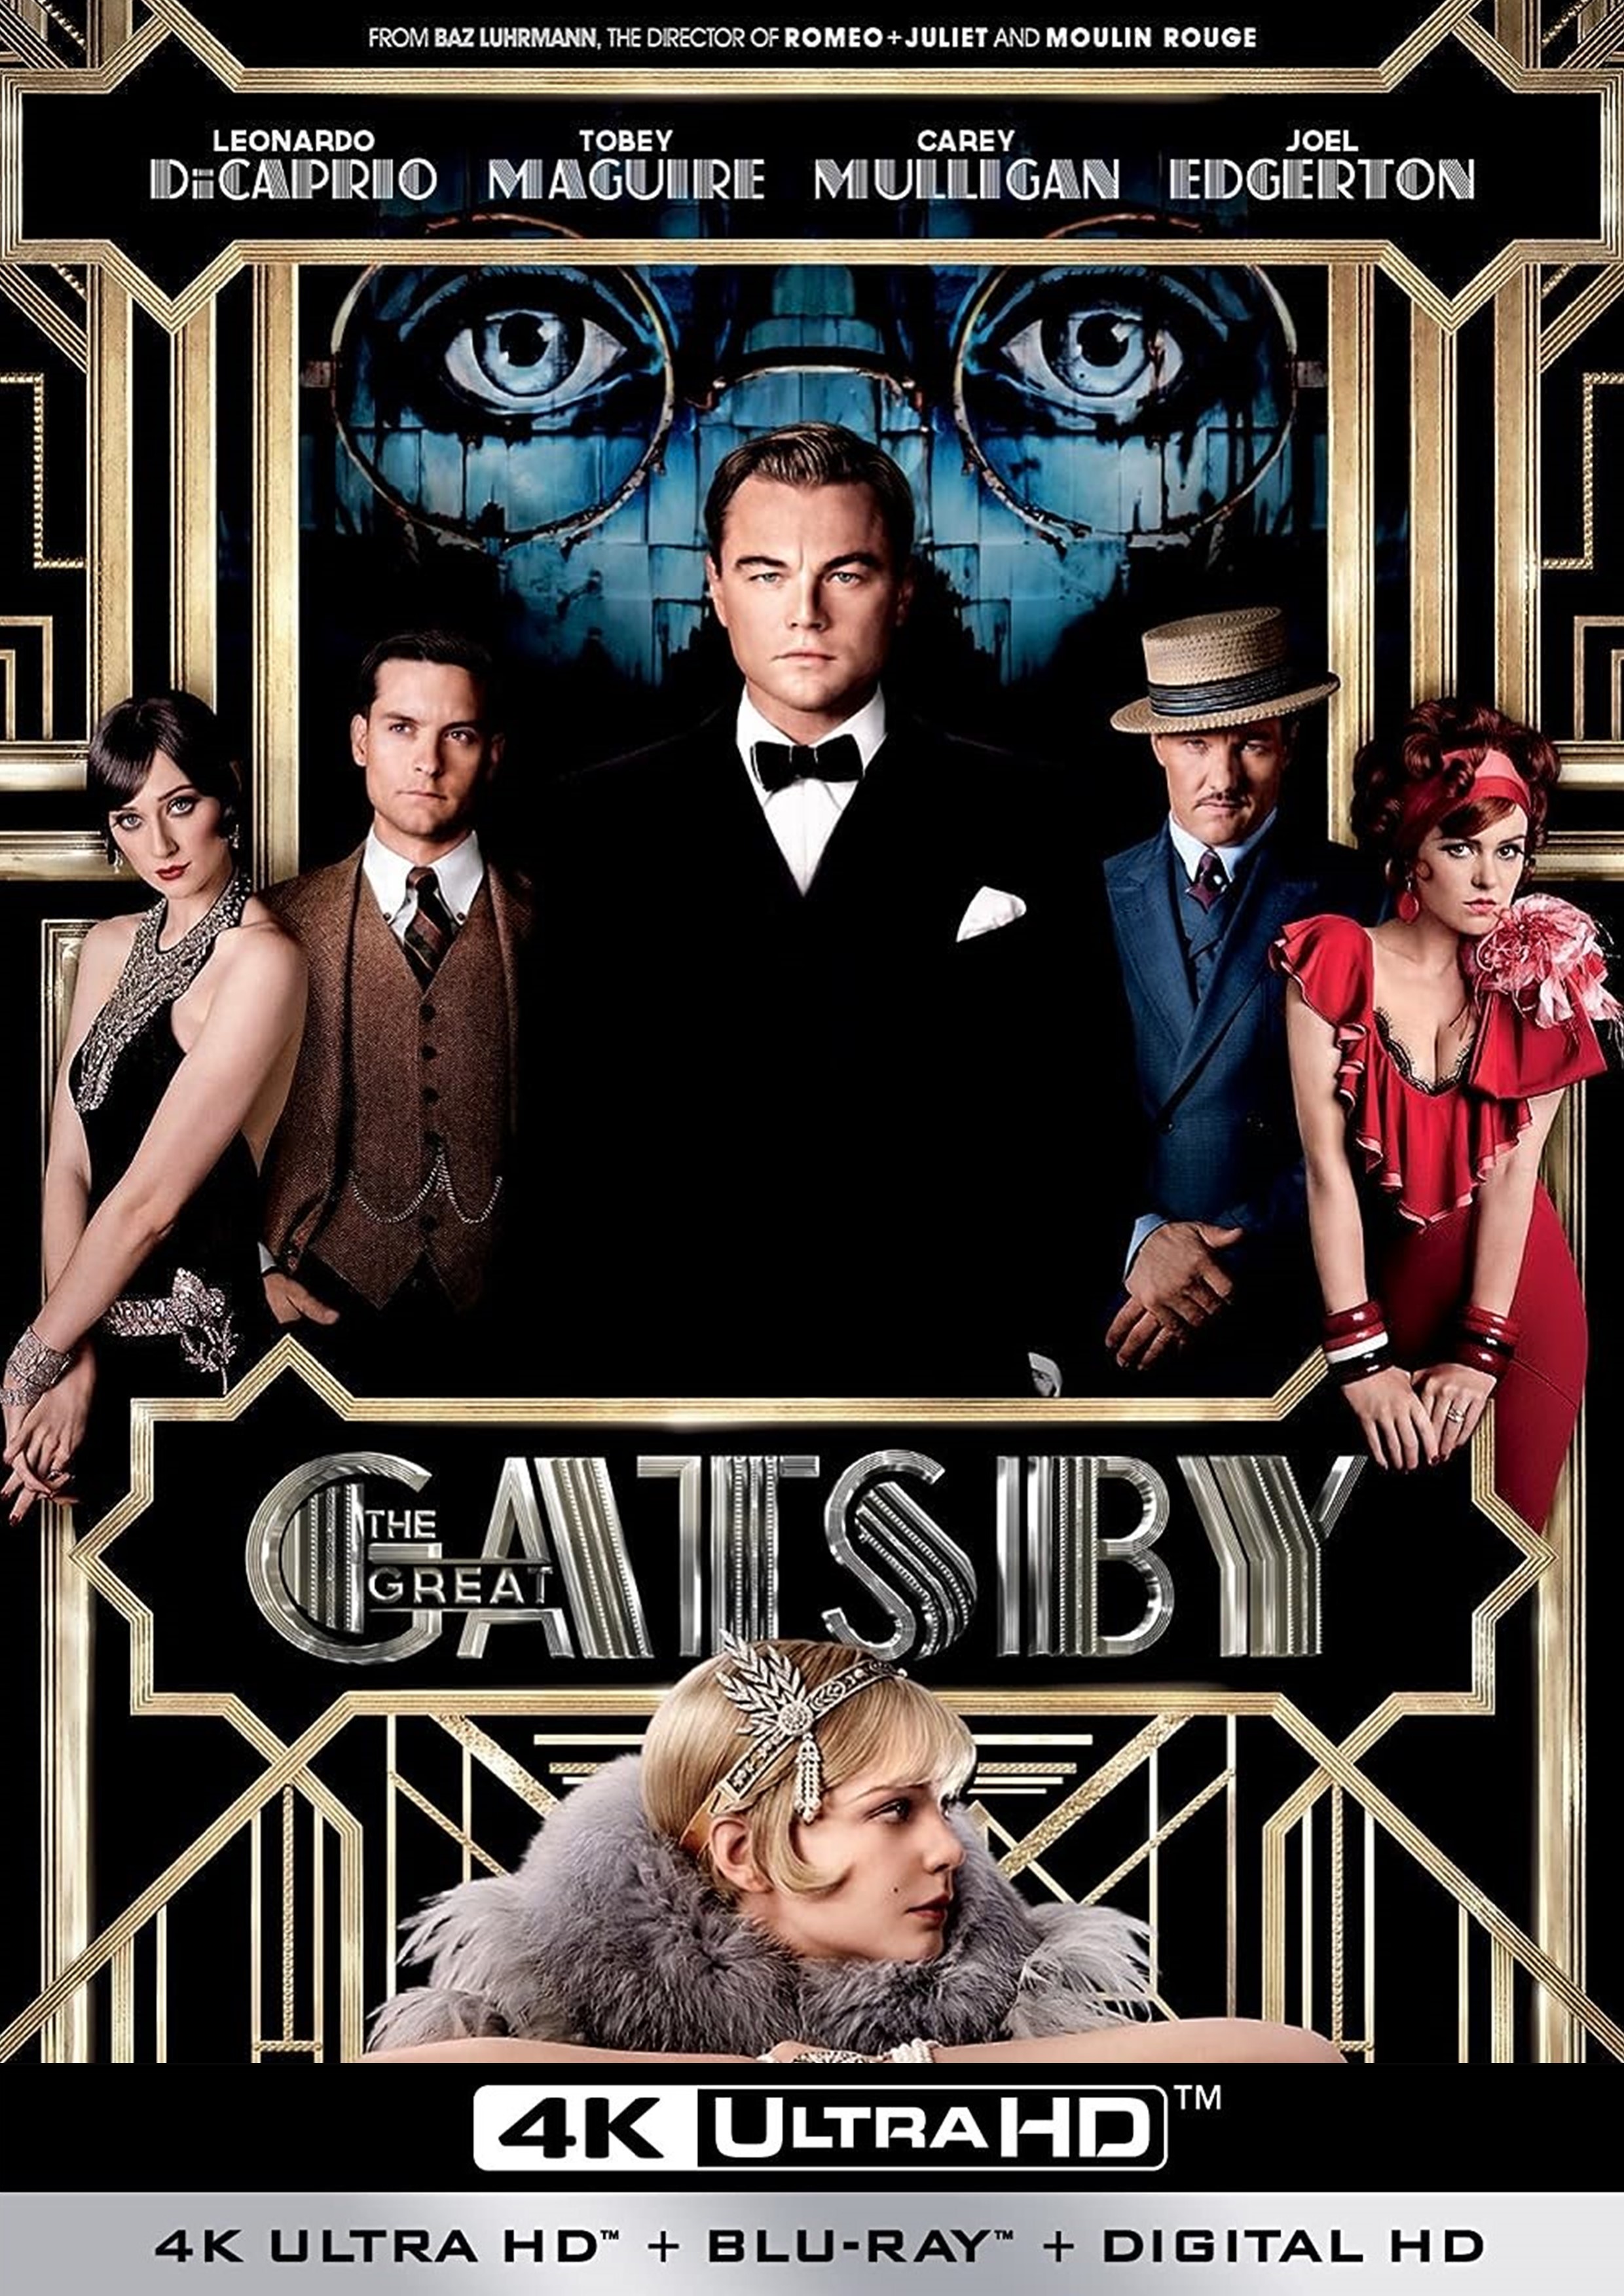 Stiahni si UHD Filmy Velky Gatsby / The Great Gatsby (2013)(CZ/EN)(2160p 4K BDRemux)(HDR10) = CSFD 73%